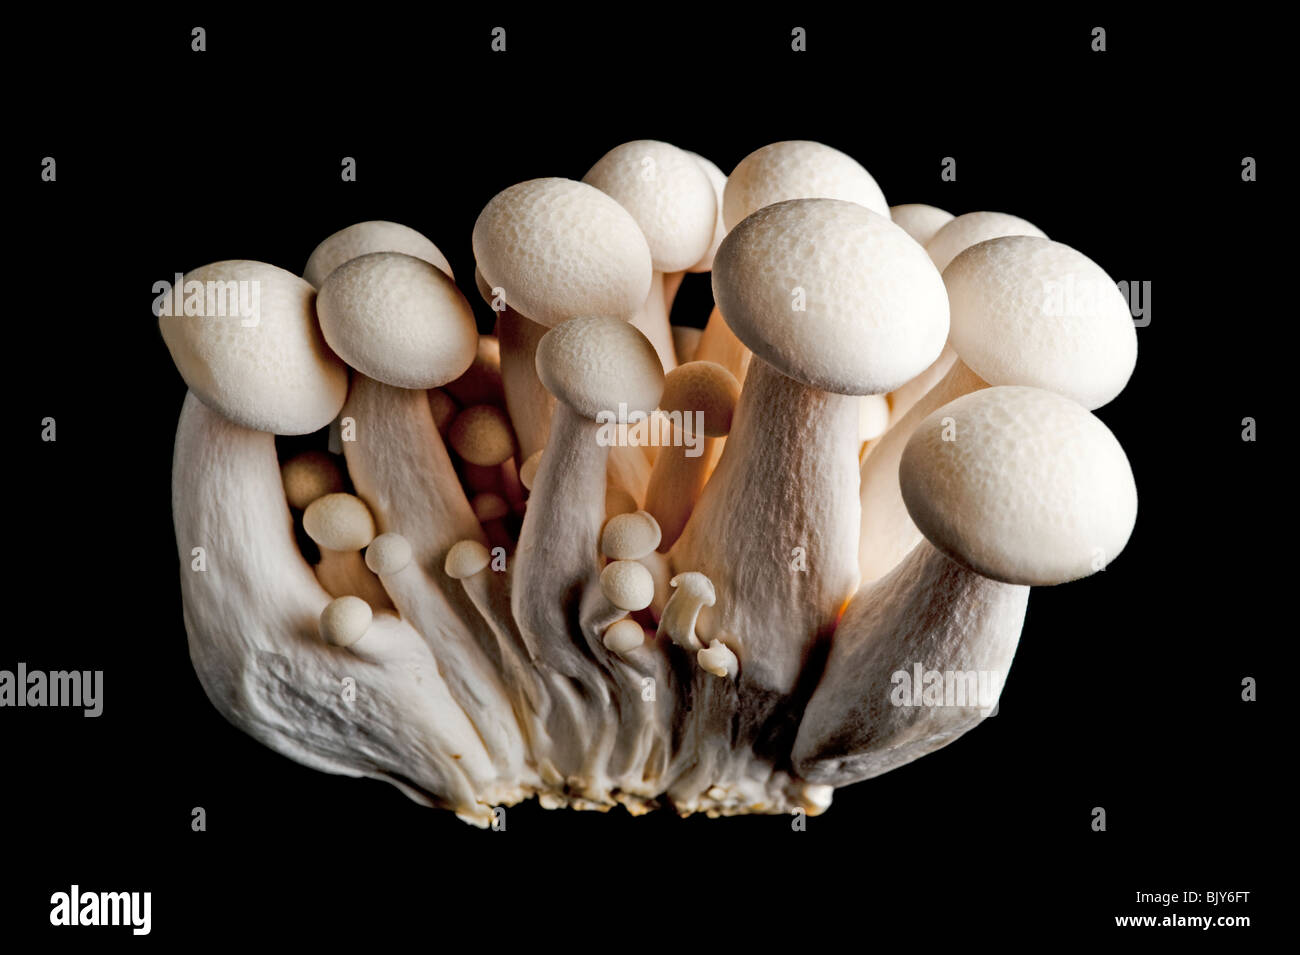 Exotic Shimenji Japanese mushrooms close up in studio setting Stock Photo